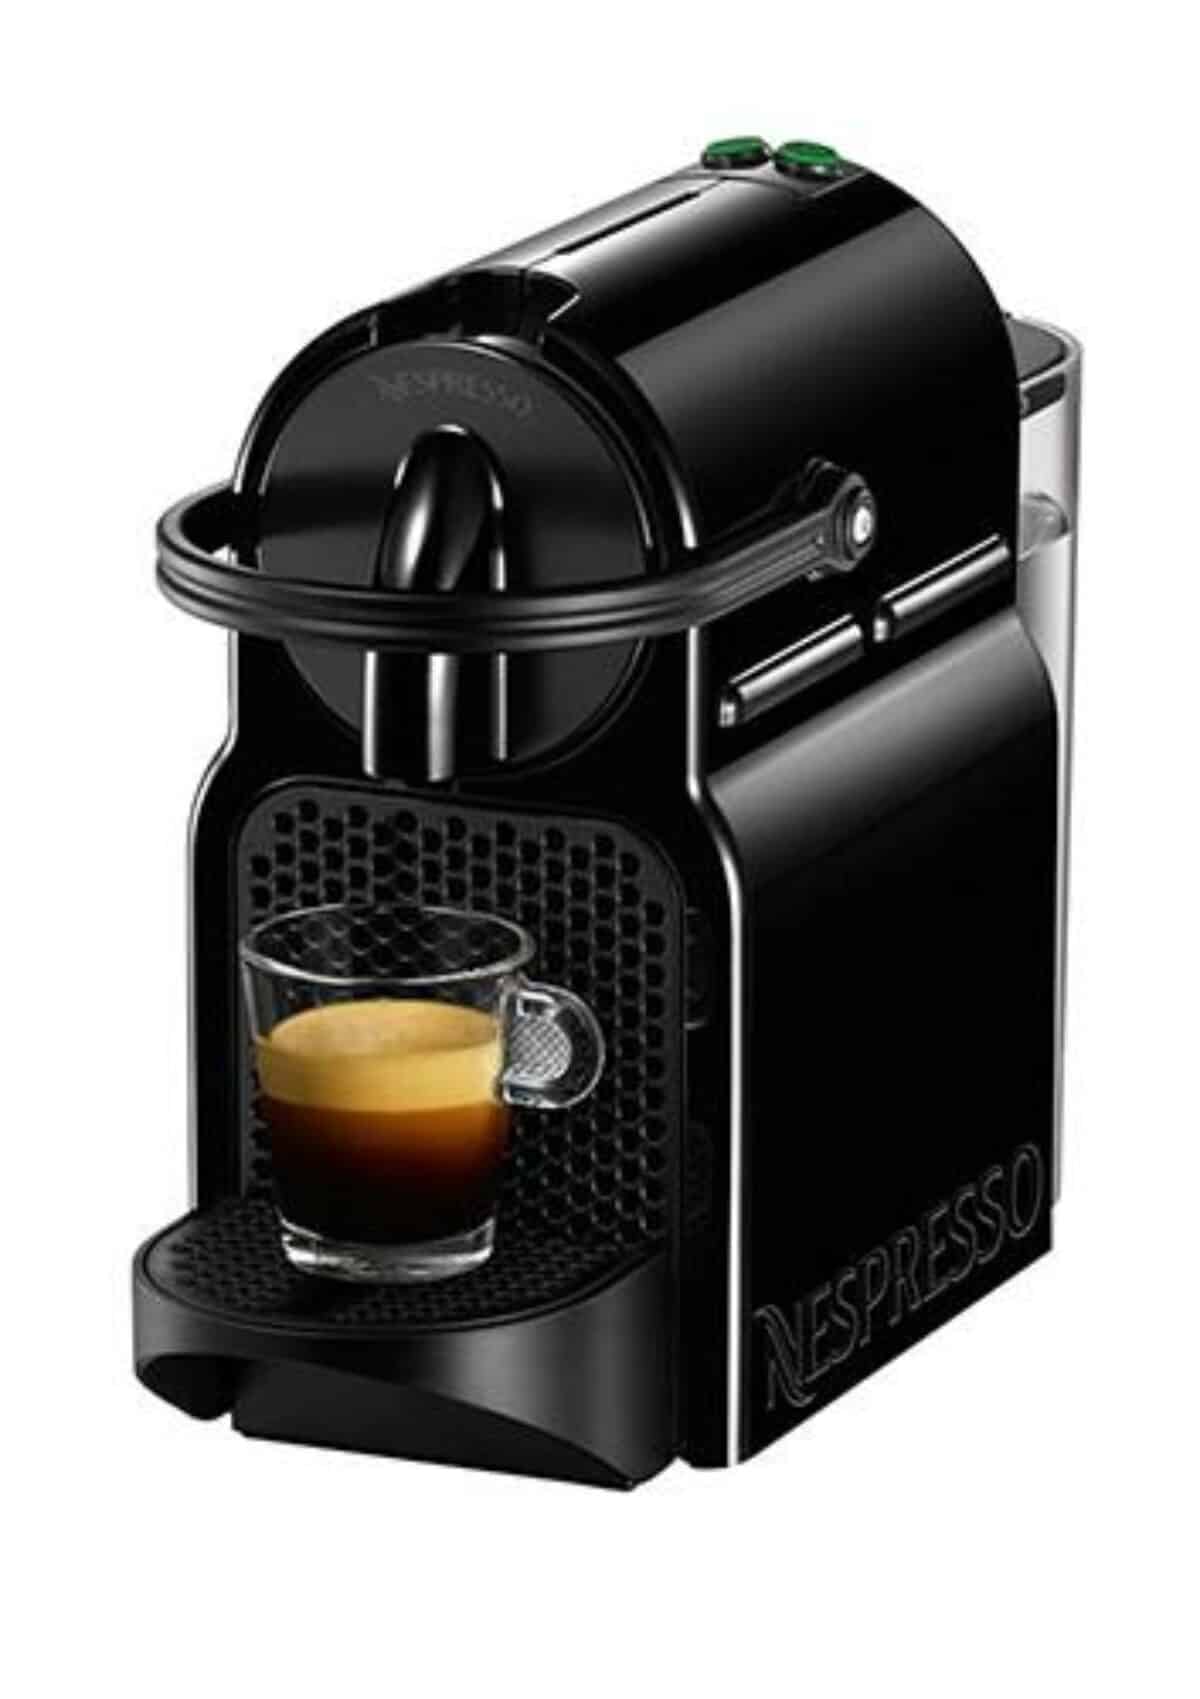 Tekstforfatter Indirekte Dusør Nespresso Inissia Espresso Machine Fuld anmeldelse - Coffeeble